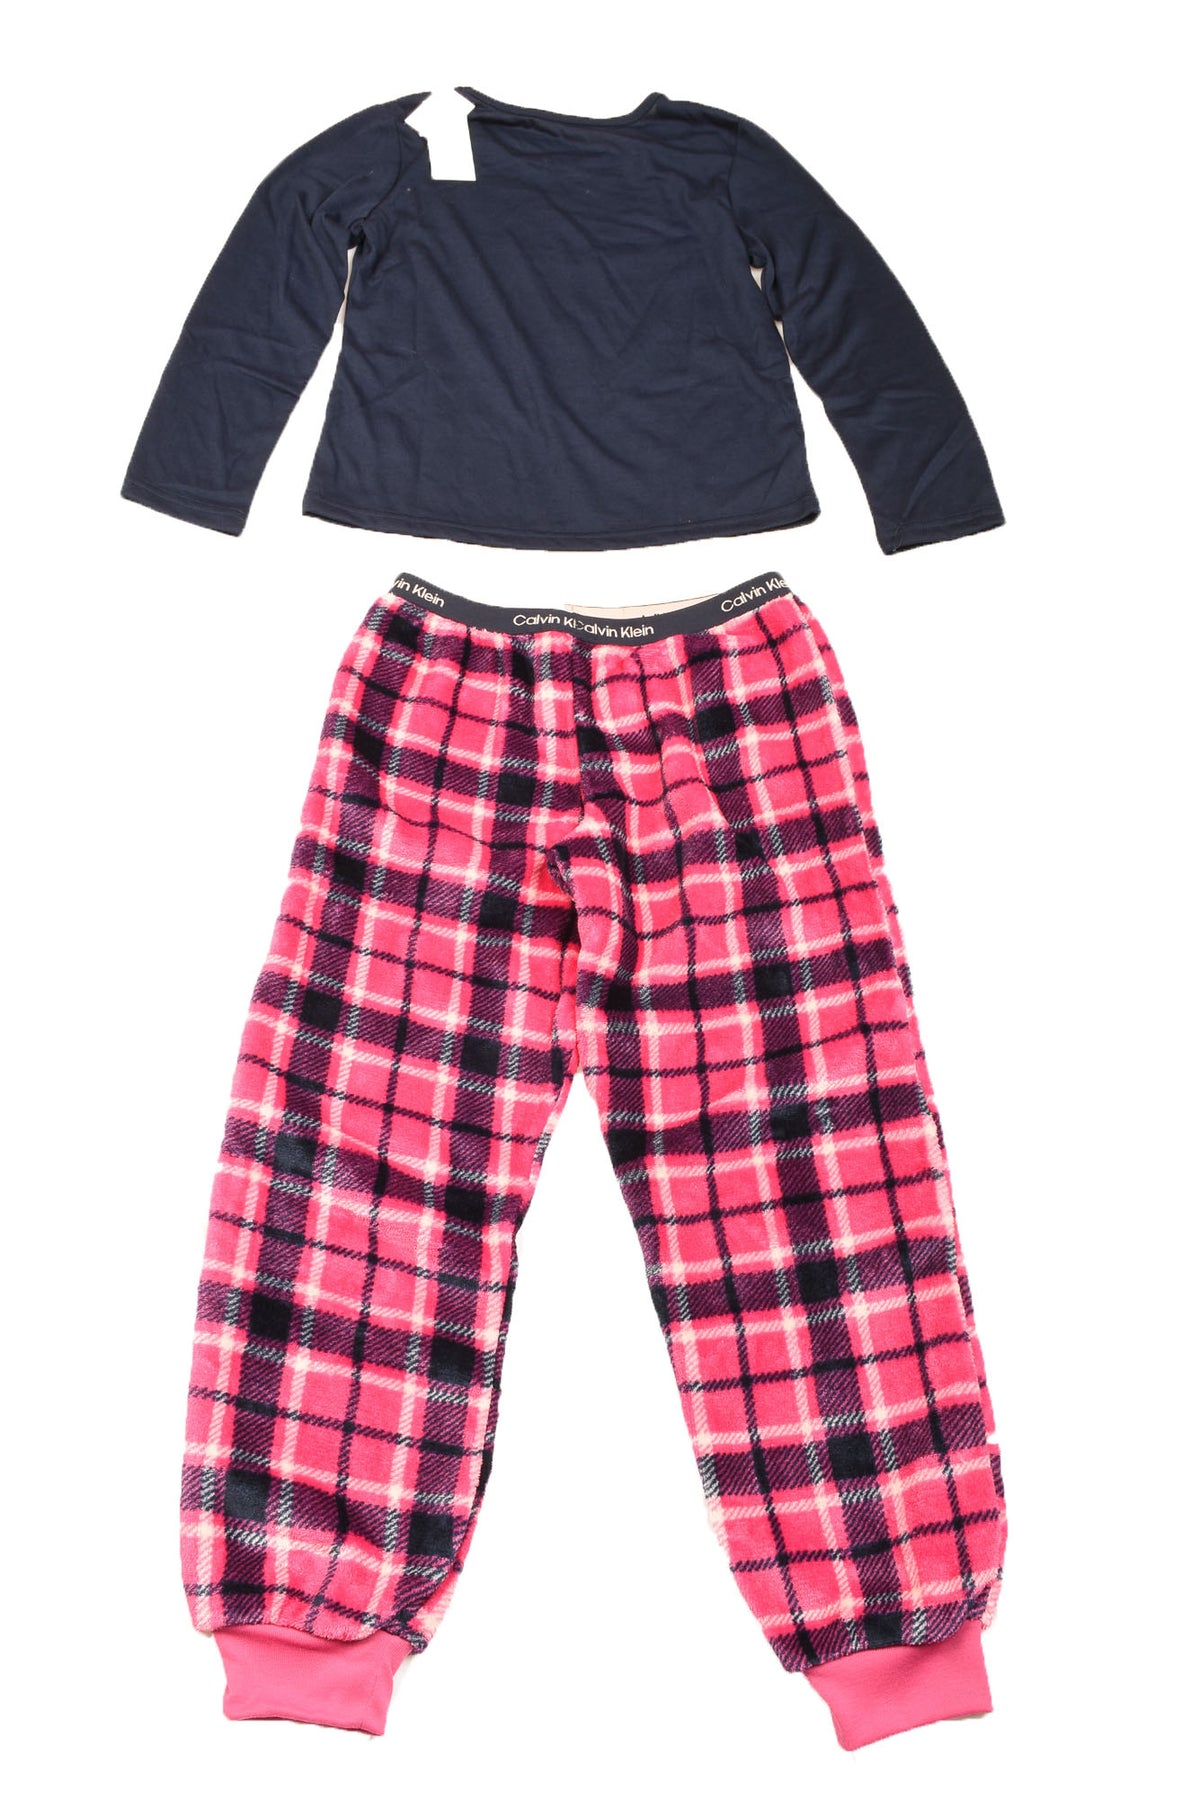 Calvin Klein Size Small (7-8) Girl&#39;s Sleepwear